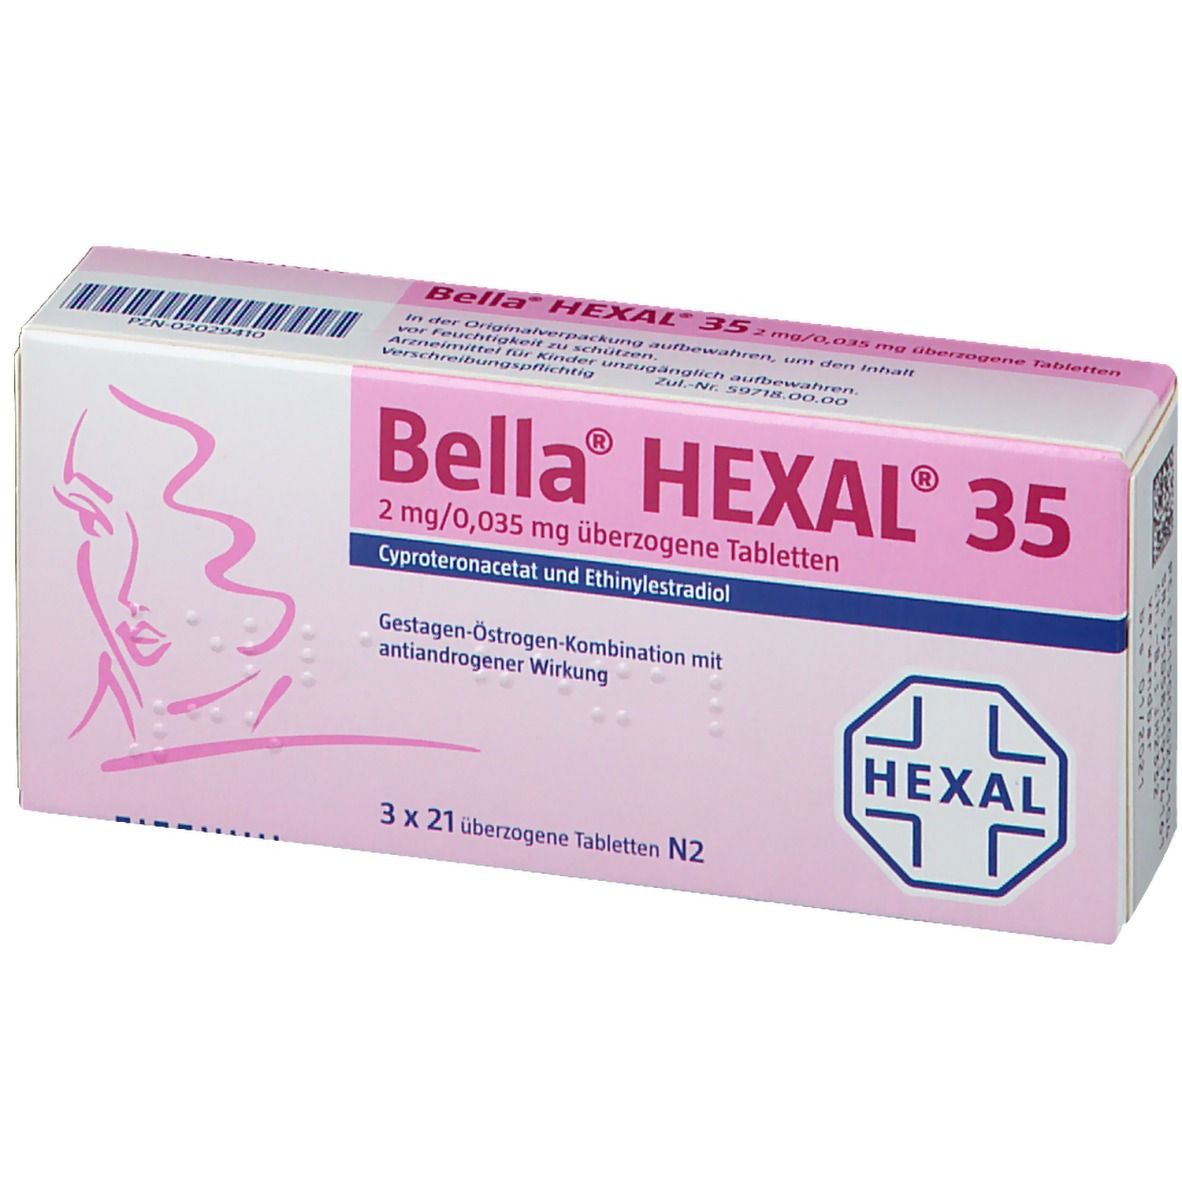 Bella® HEXAL® 35 2 mg/0,035 mg